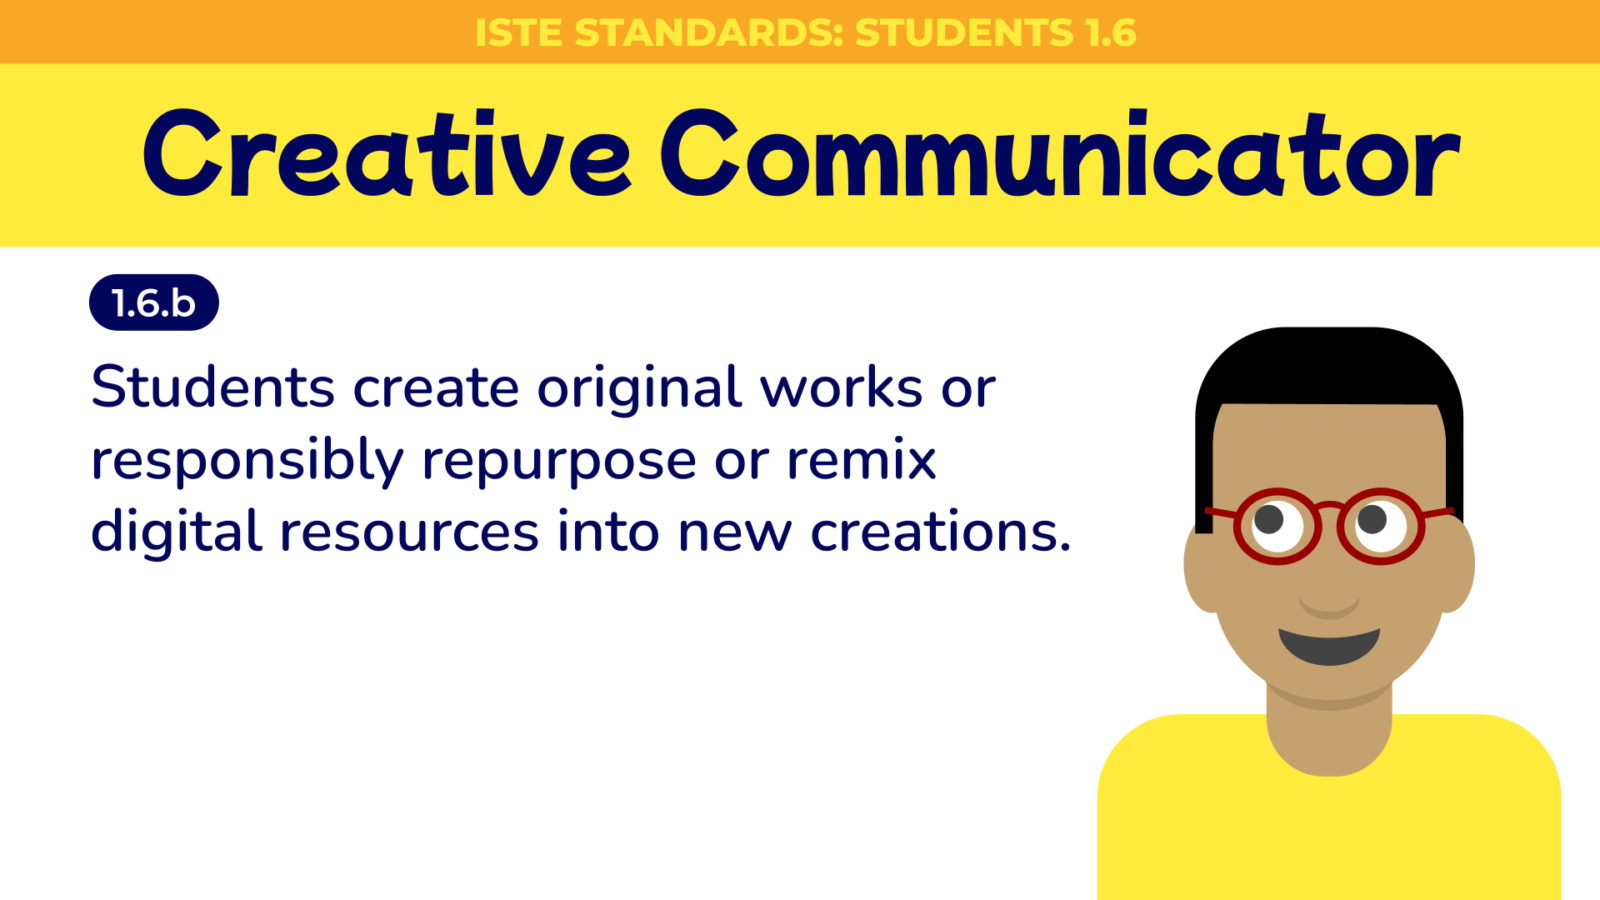 Creative Communicator 1.6.b